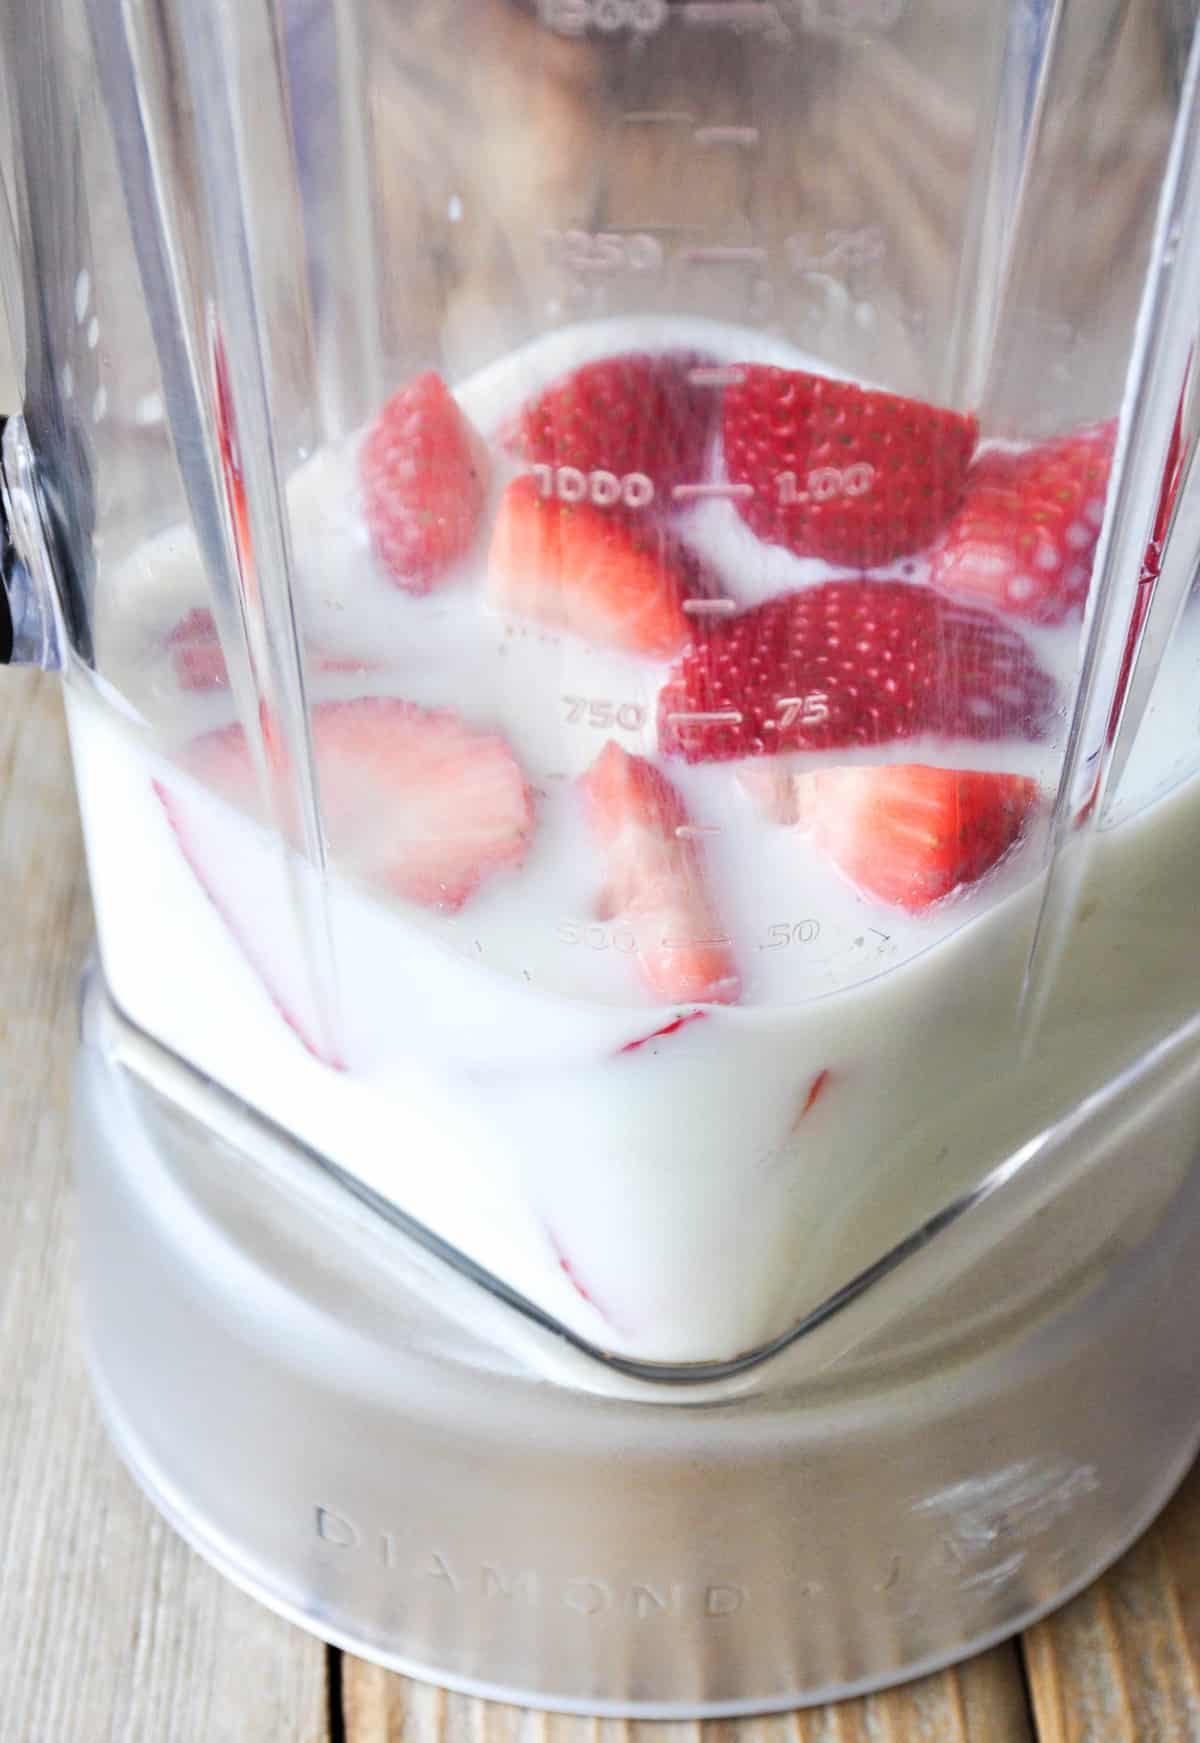 Plain Greek yogurt, milk and strawberries in blender